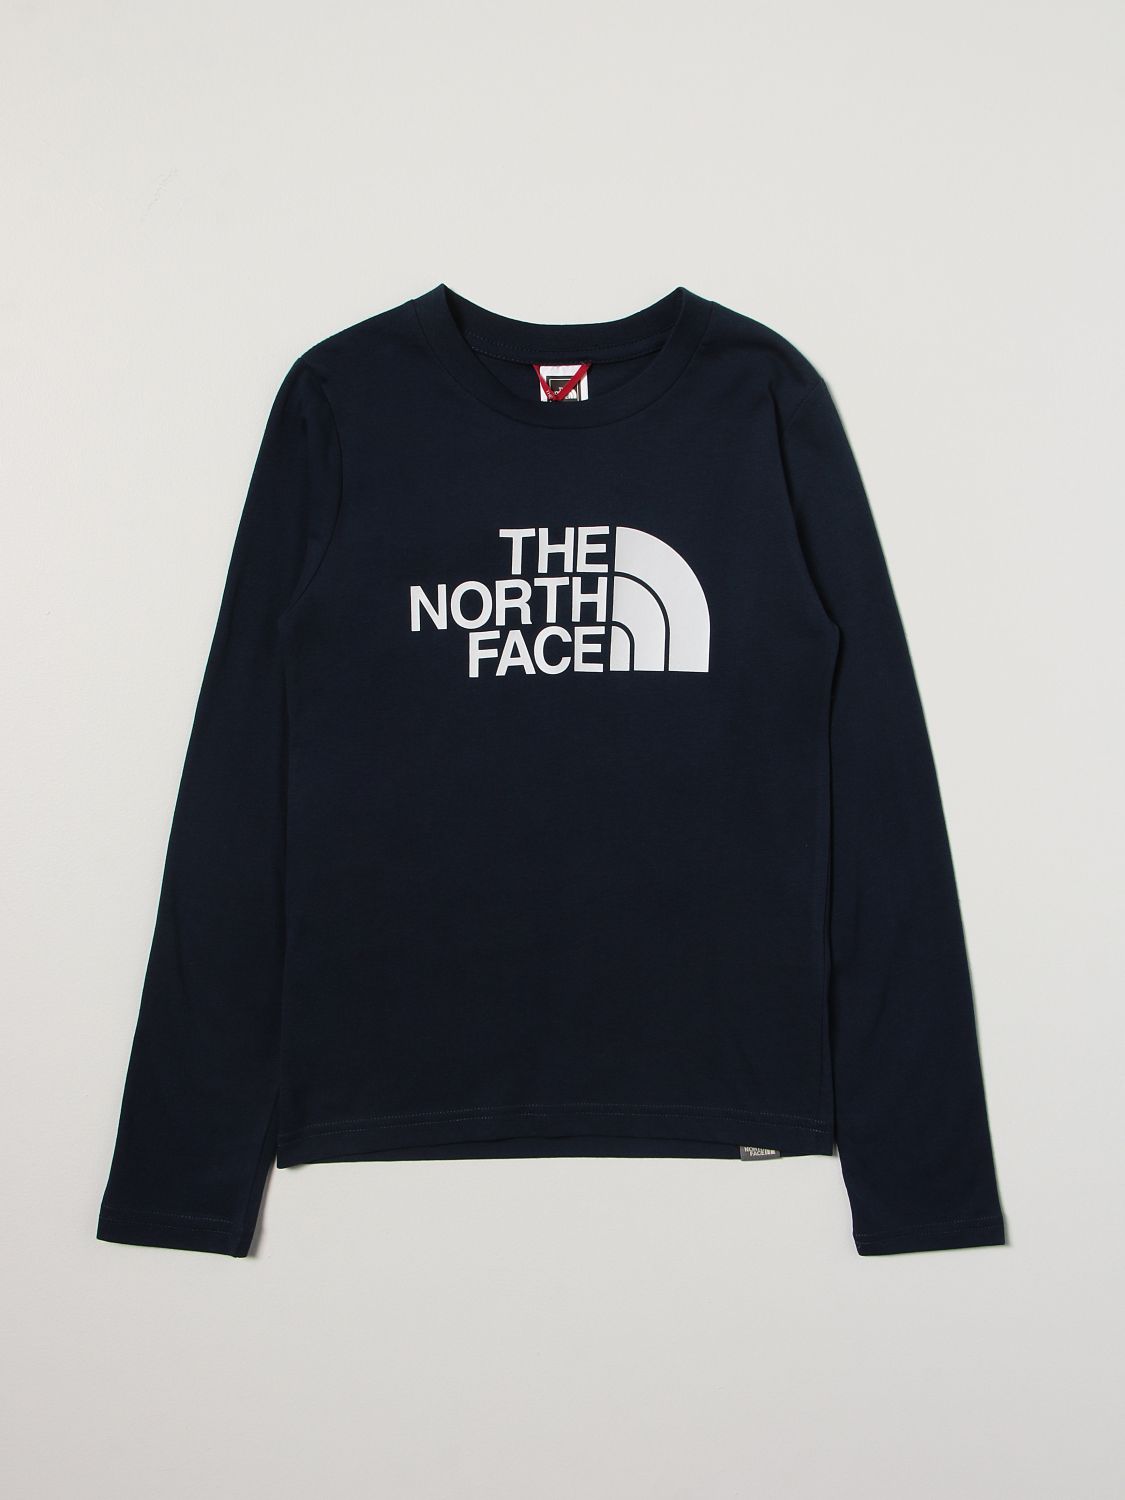 Camiseta The North Face: Camiseta niños The North Face azul oscuro 1